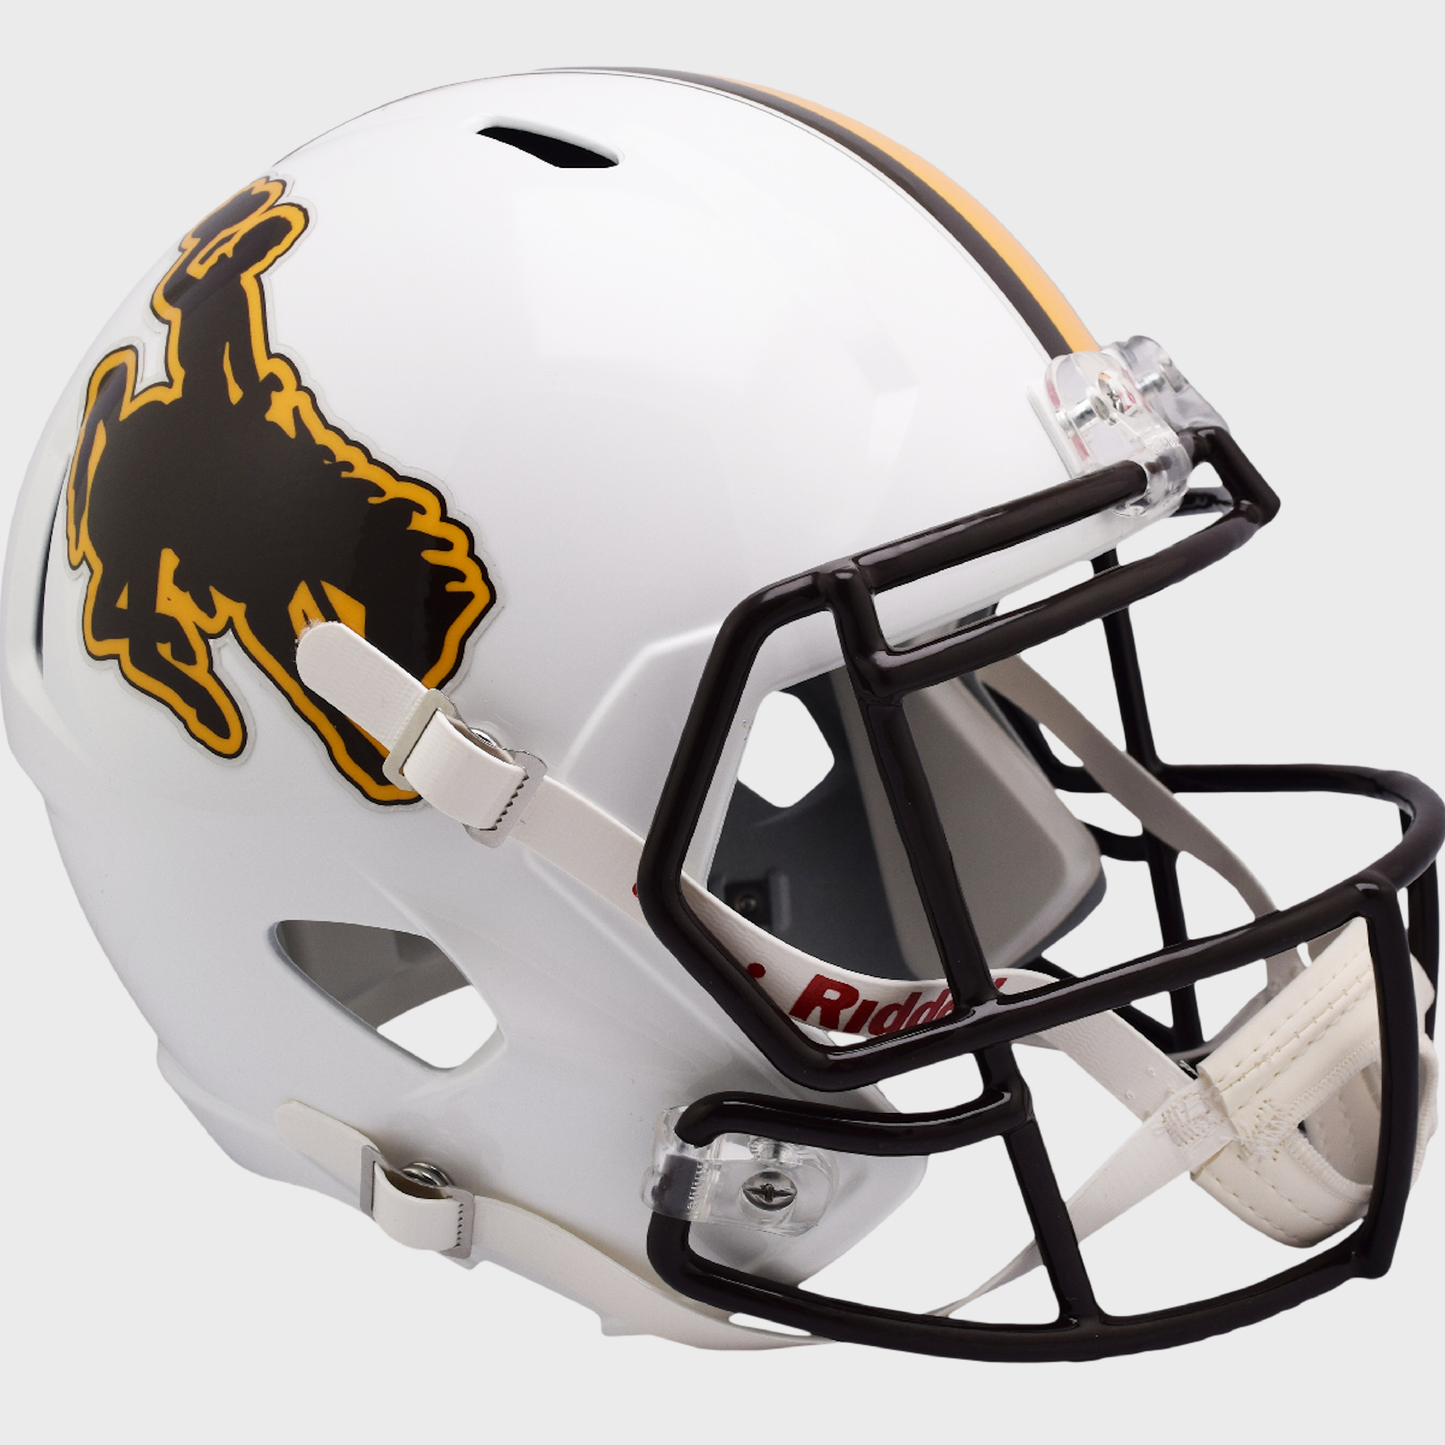 Wyoming Cowboys full size replica helmet